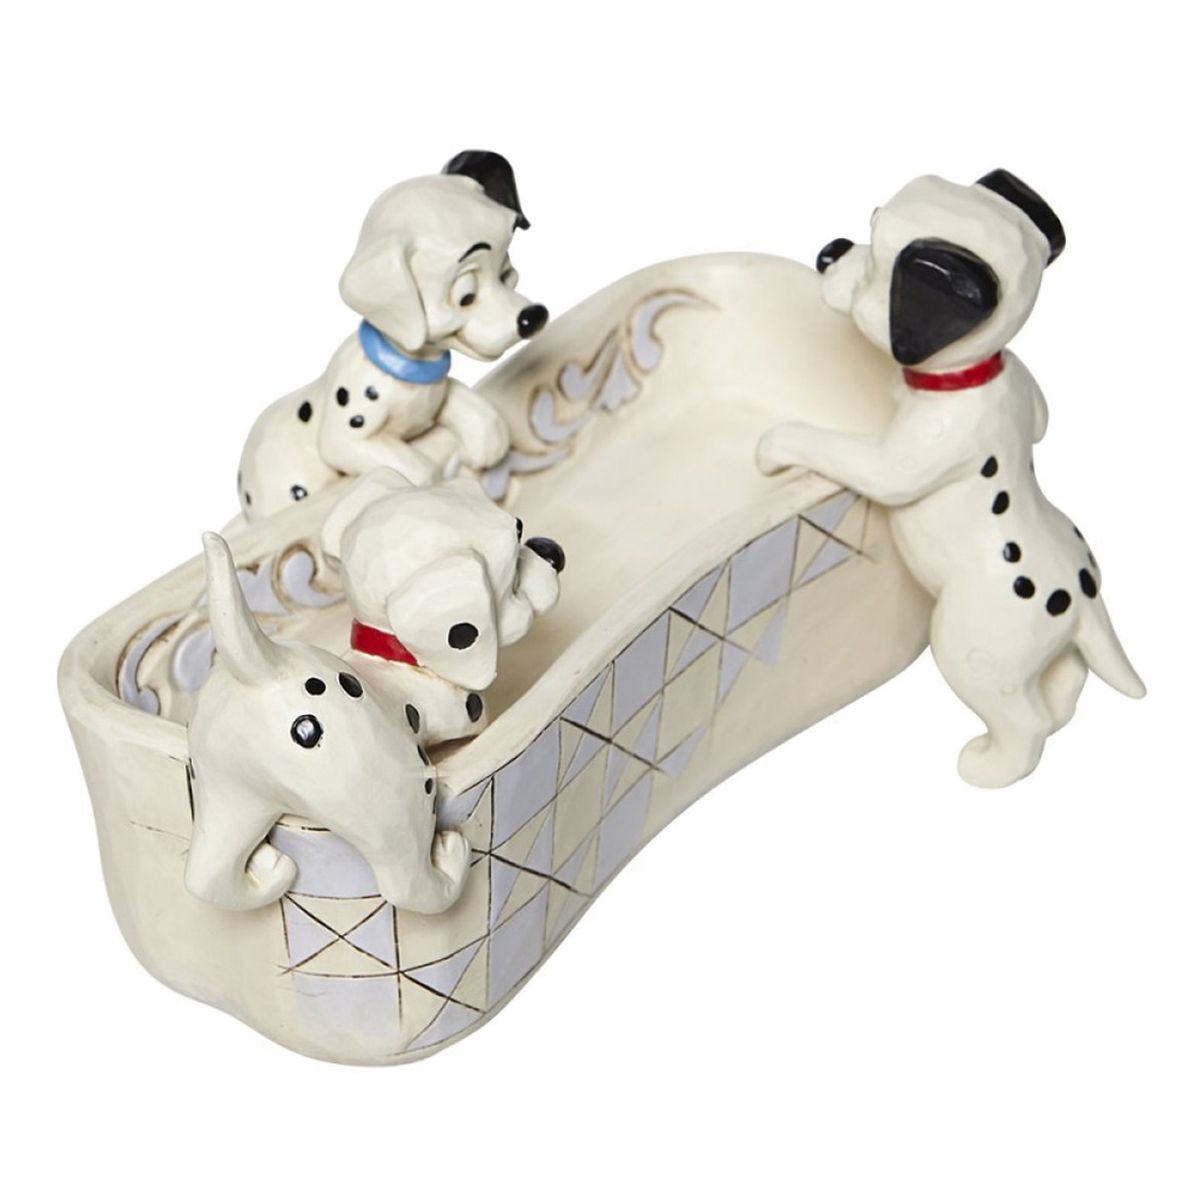 Figurine Puppy Bowl - 101 Dalmatians Bone Shaped Dish